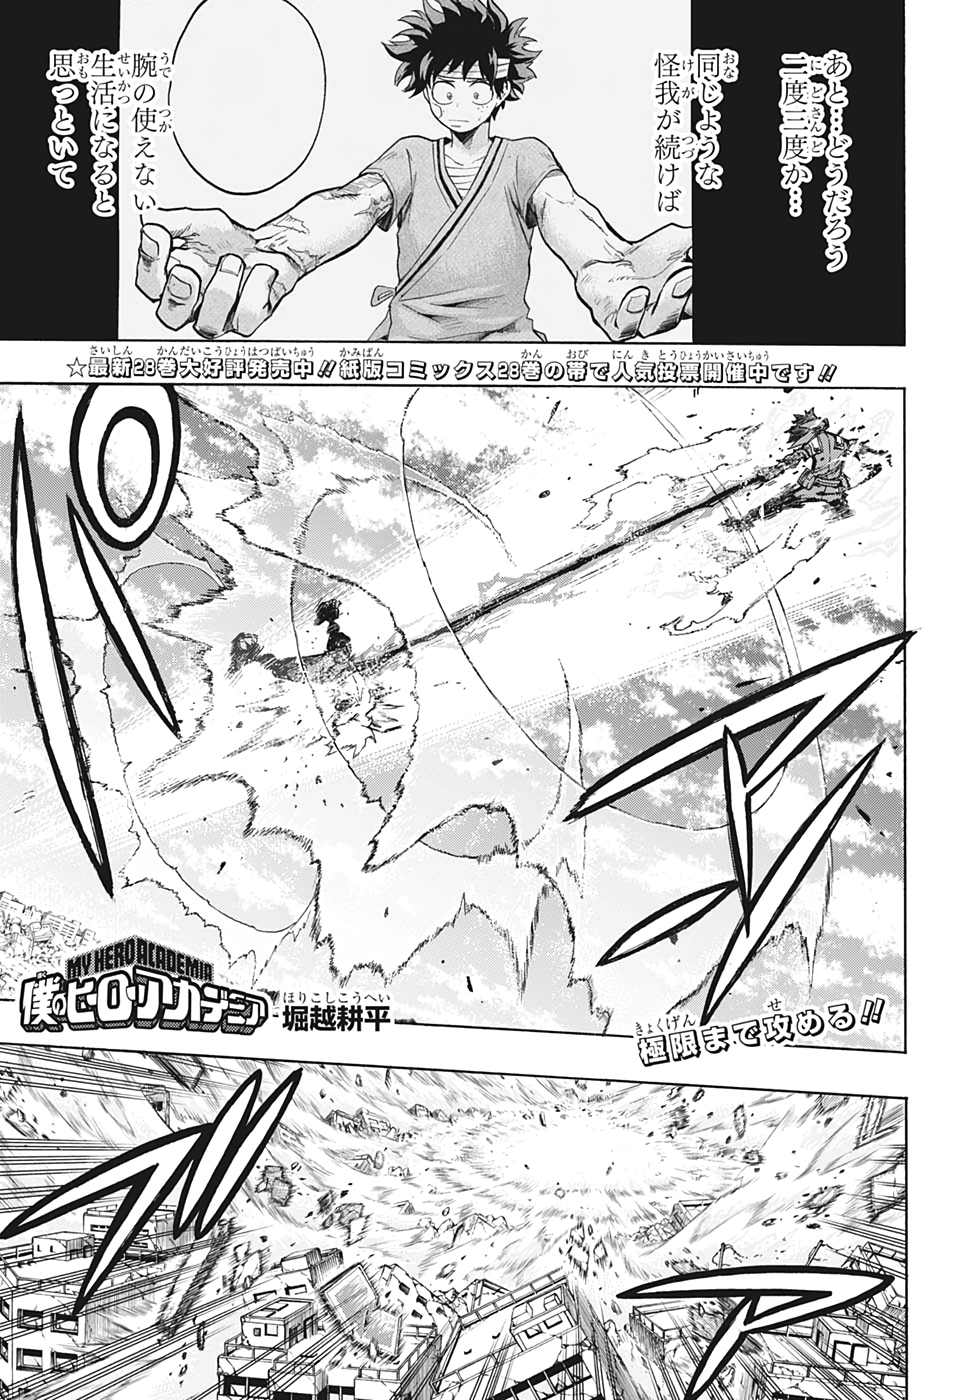 Boku no Hero Academia - Chapter 285 - Page 1